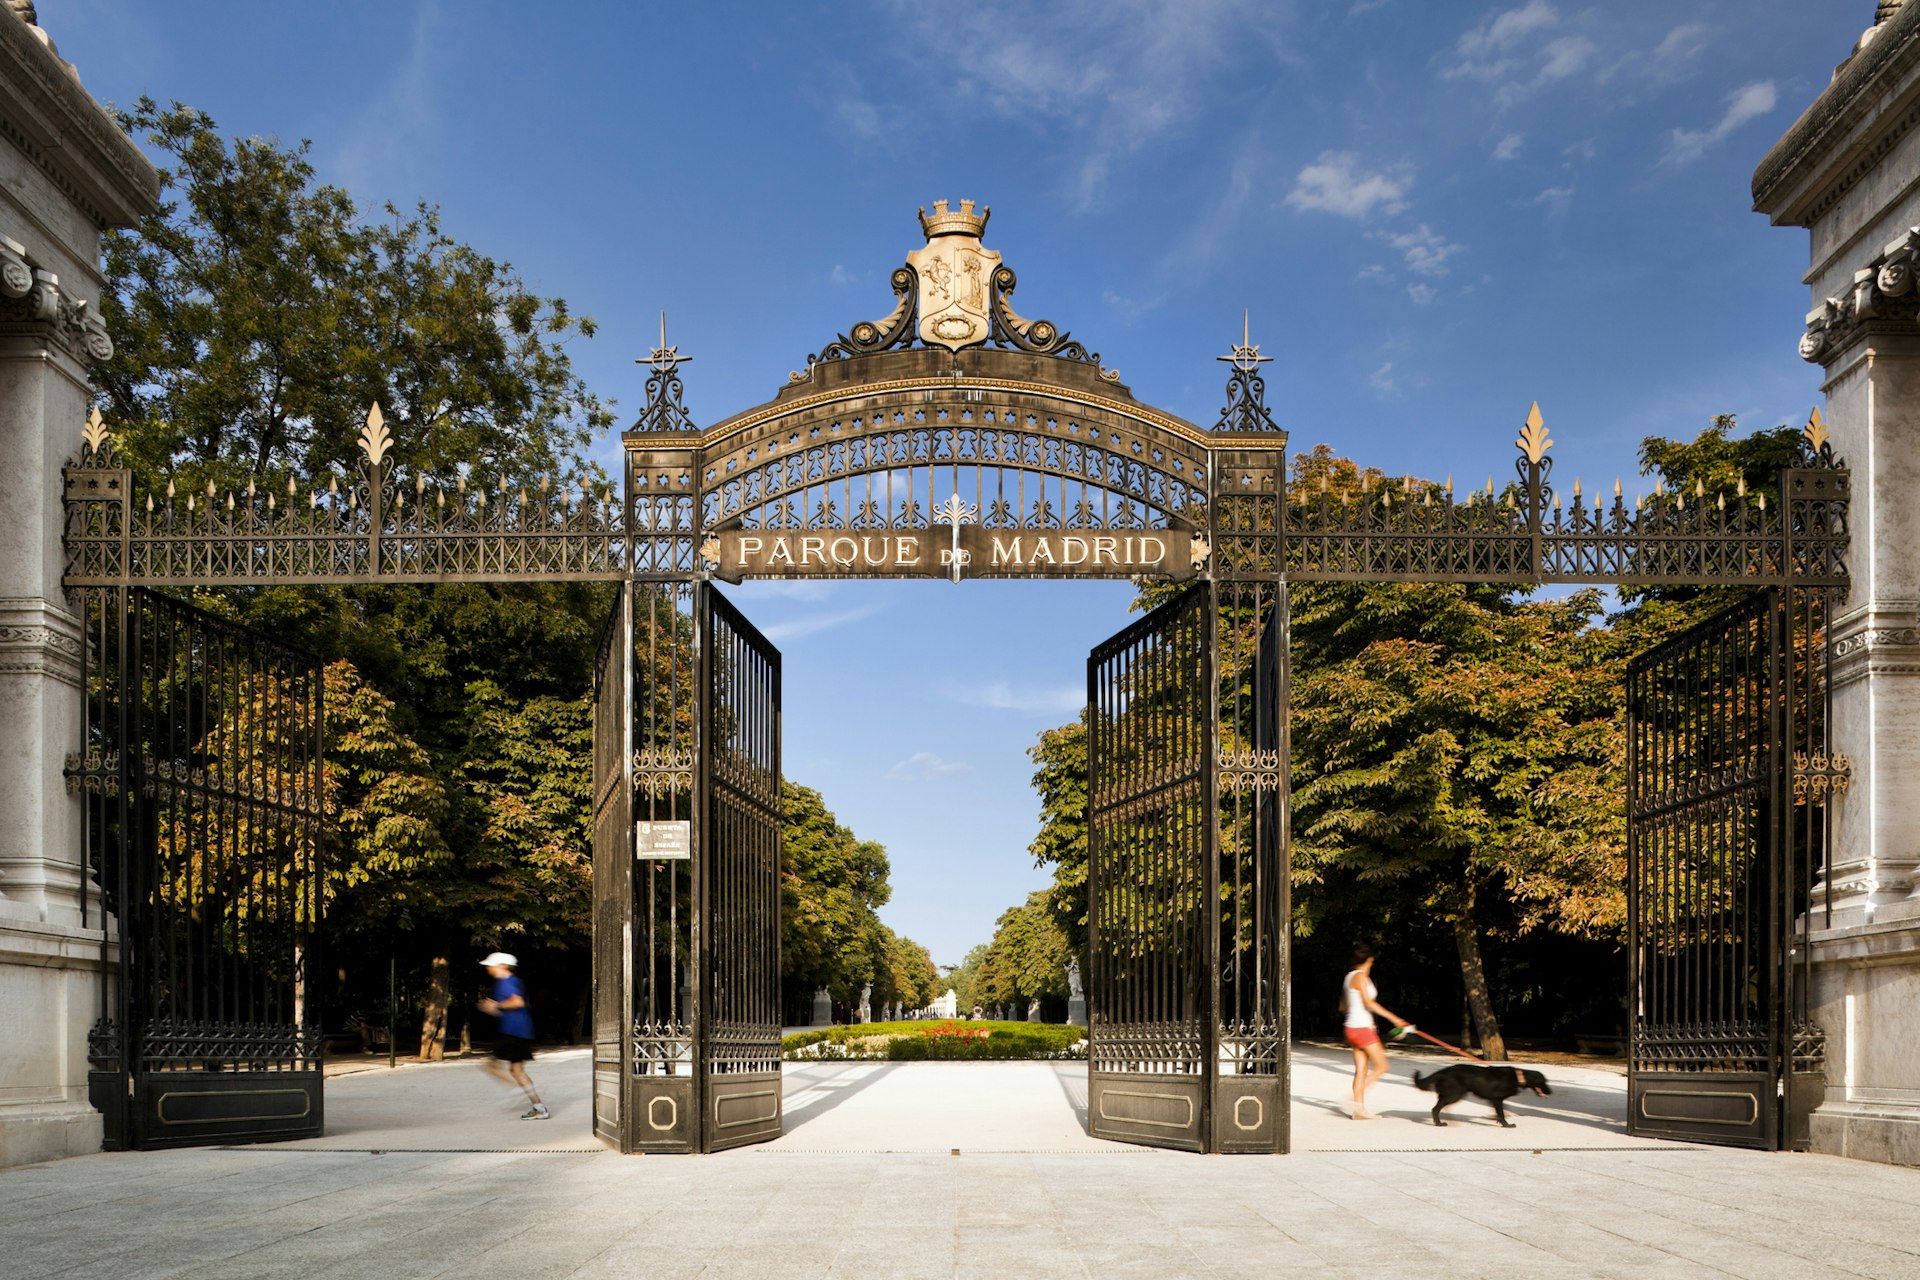 The entrance to El Retiro, Madrid